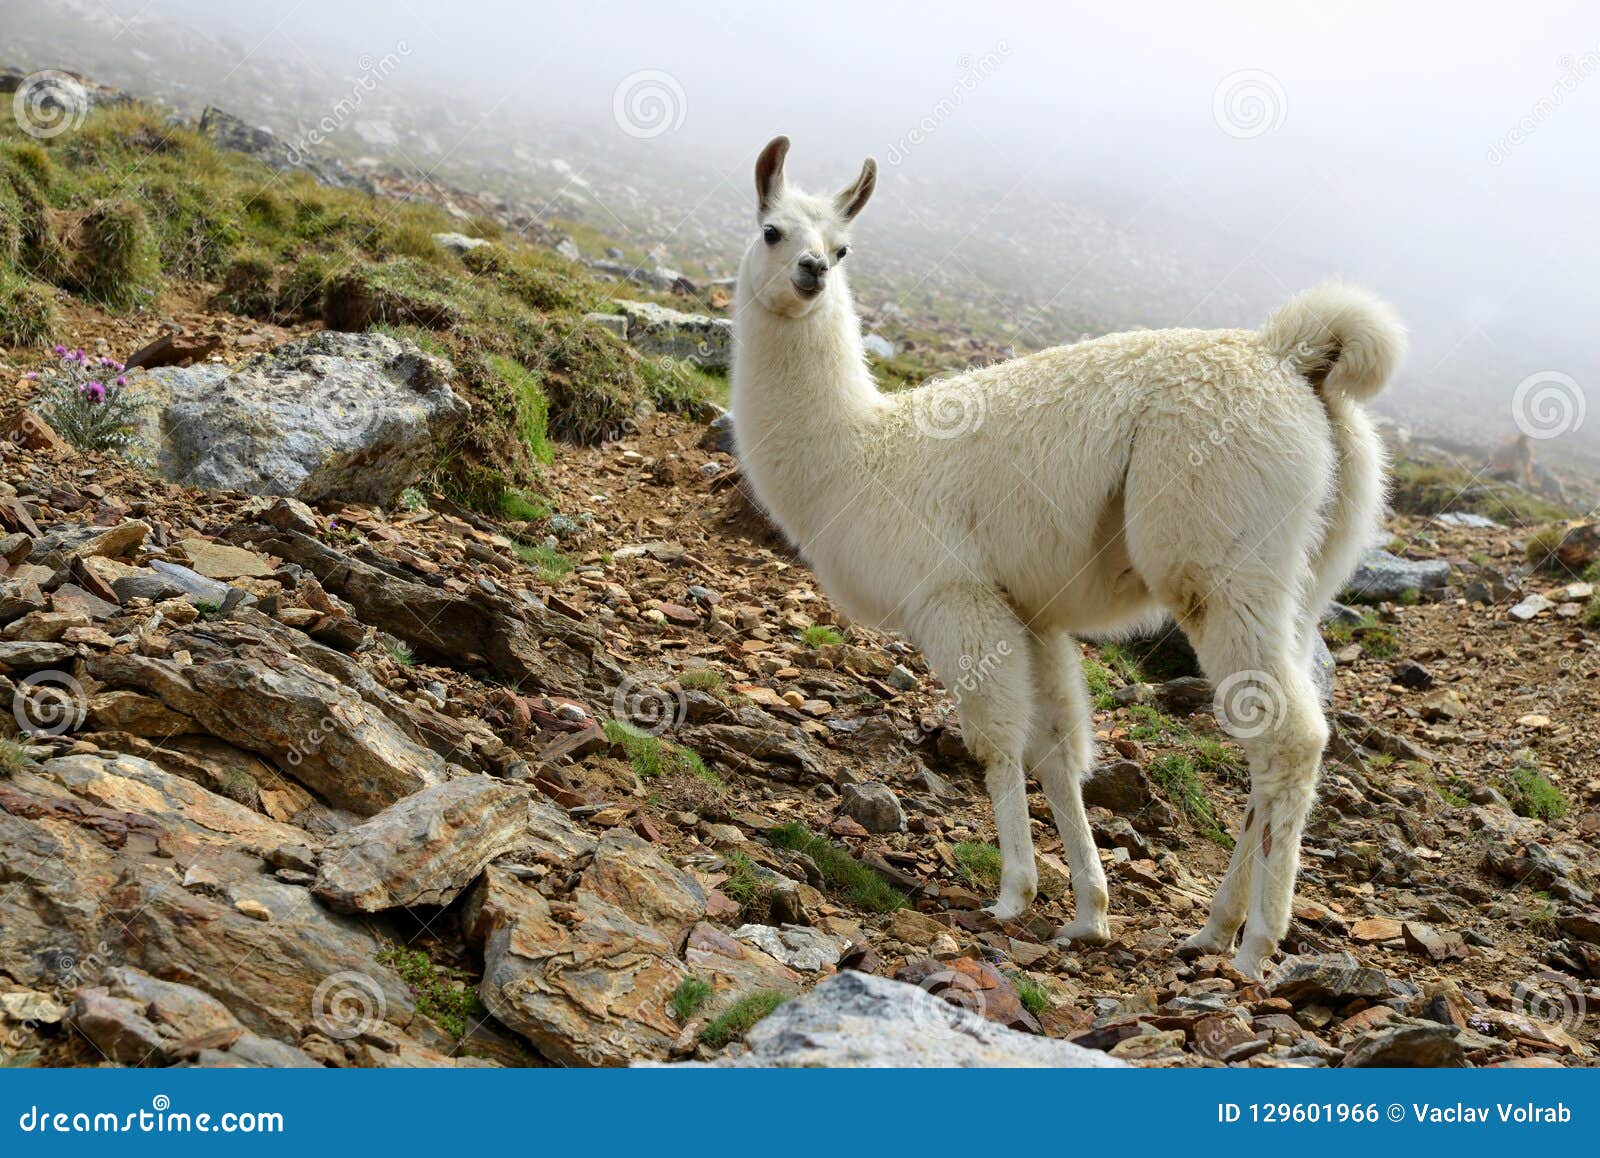 white llama lama glama